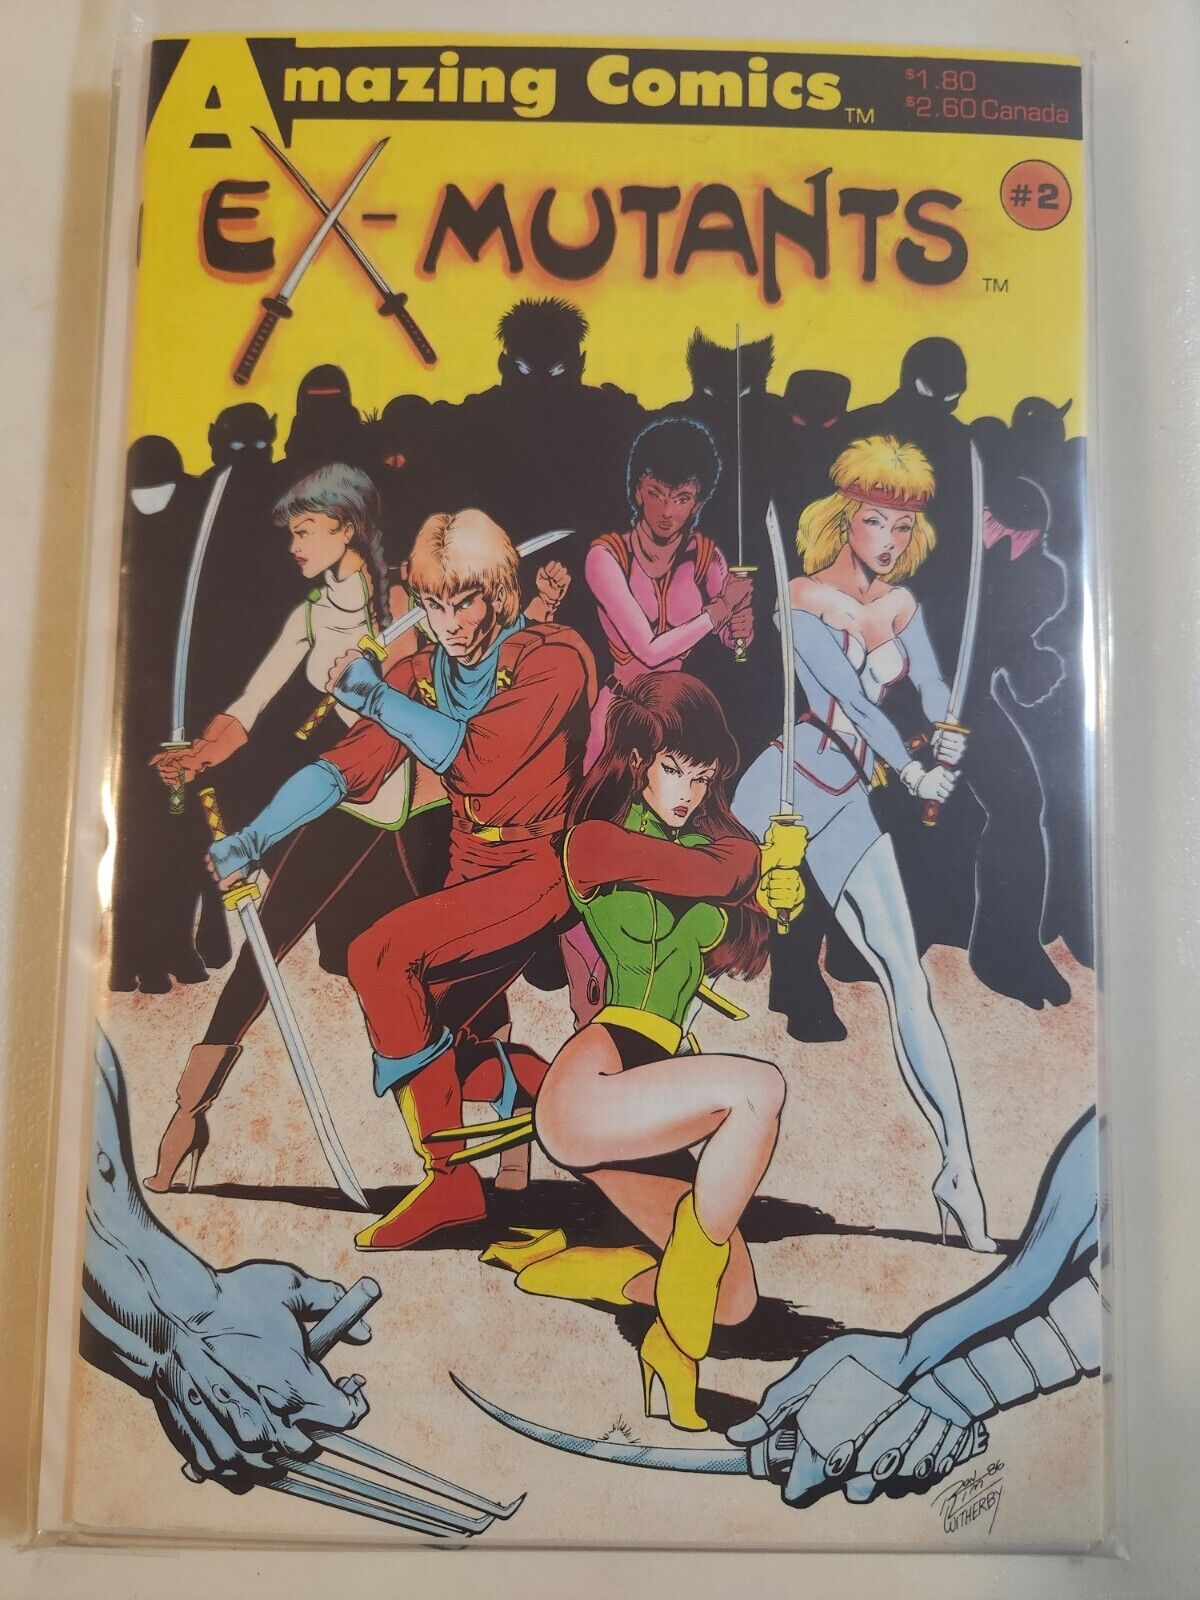 Ex-Mutants #2 1986 AMAZING COMIC BOOK